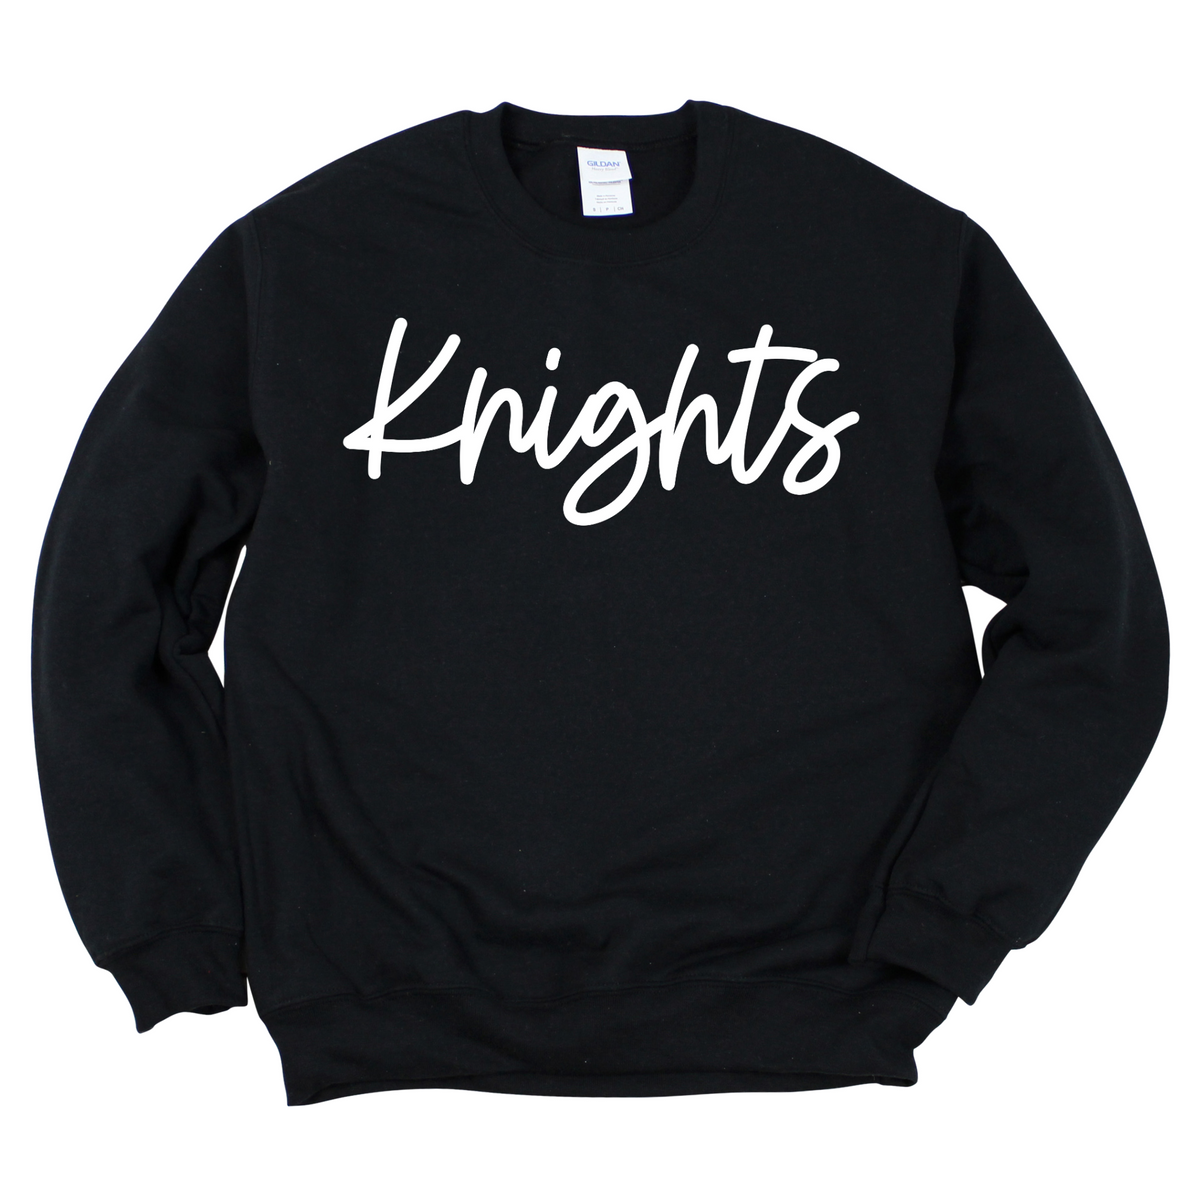 Knights Crewneck Sweatshirt